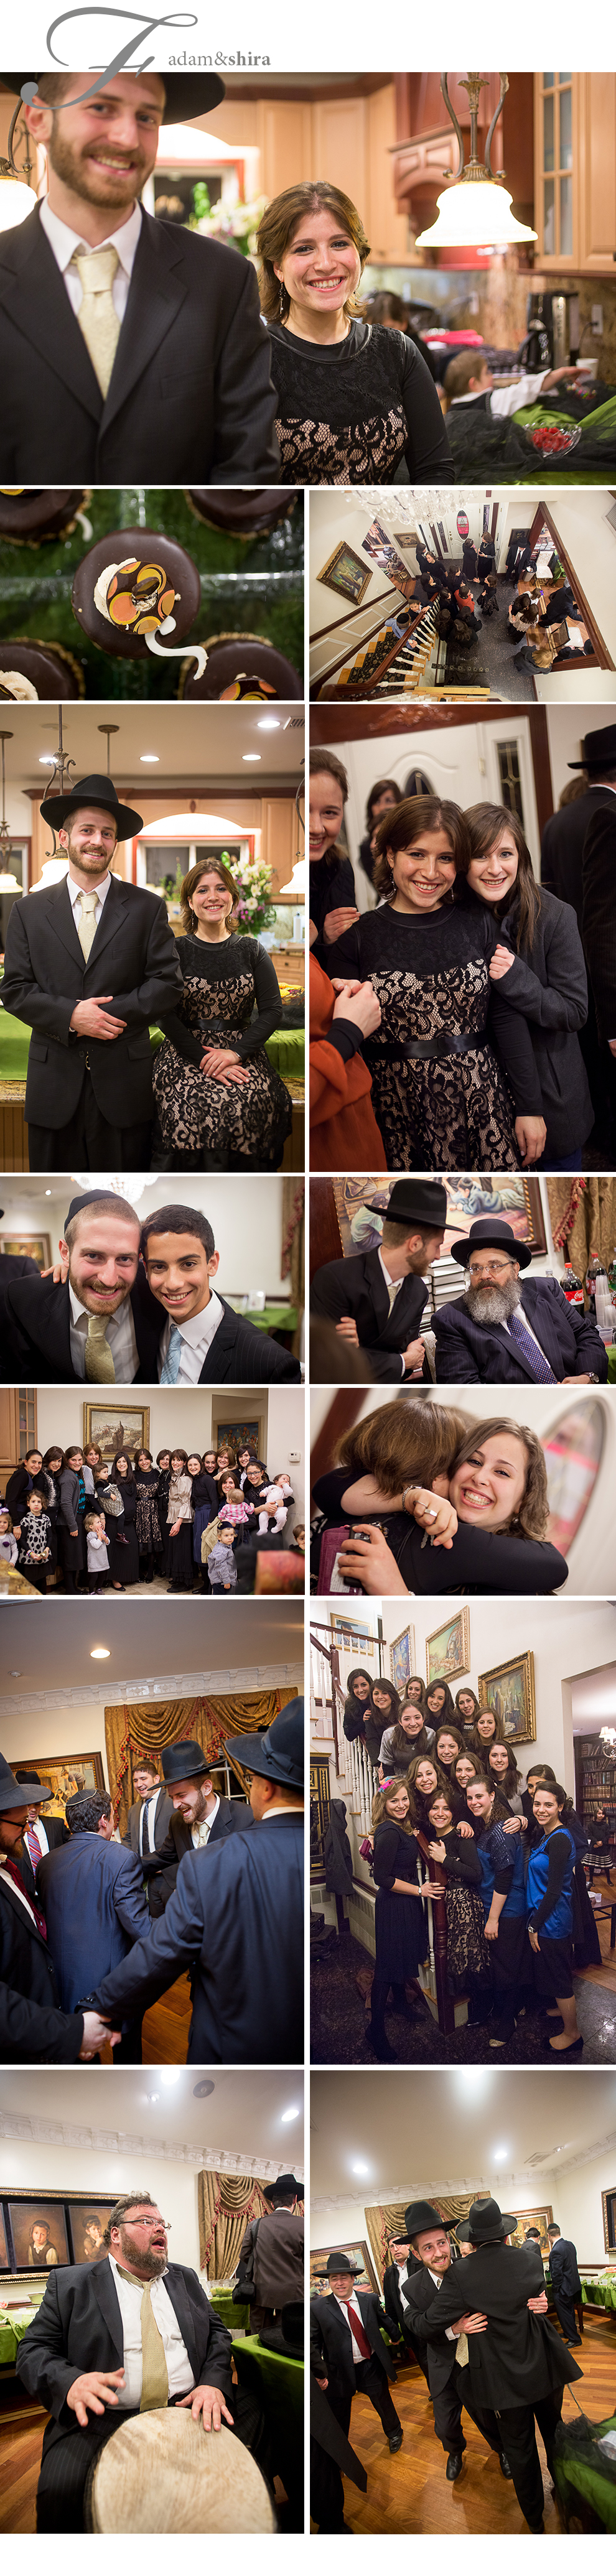 Shira Klatzko, Benzion Klatzko, Adam Freedman, Monsey Wedding Photography, Engagement Photographer